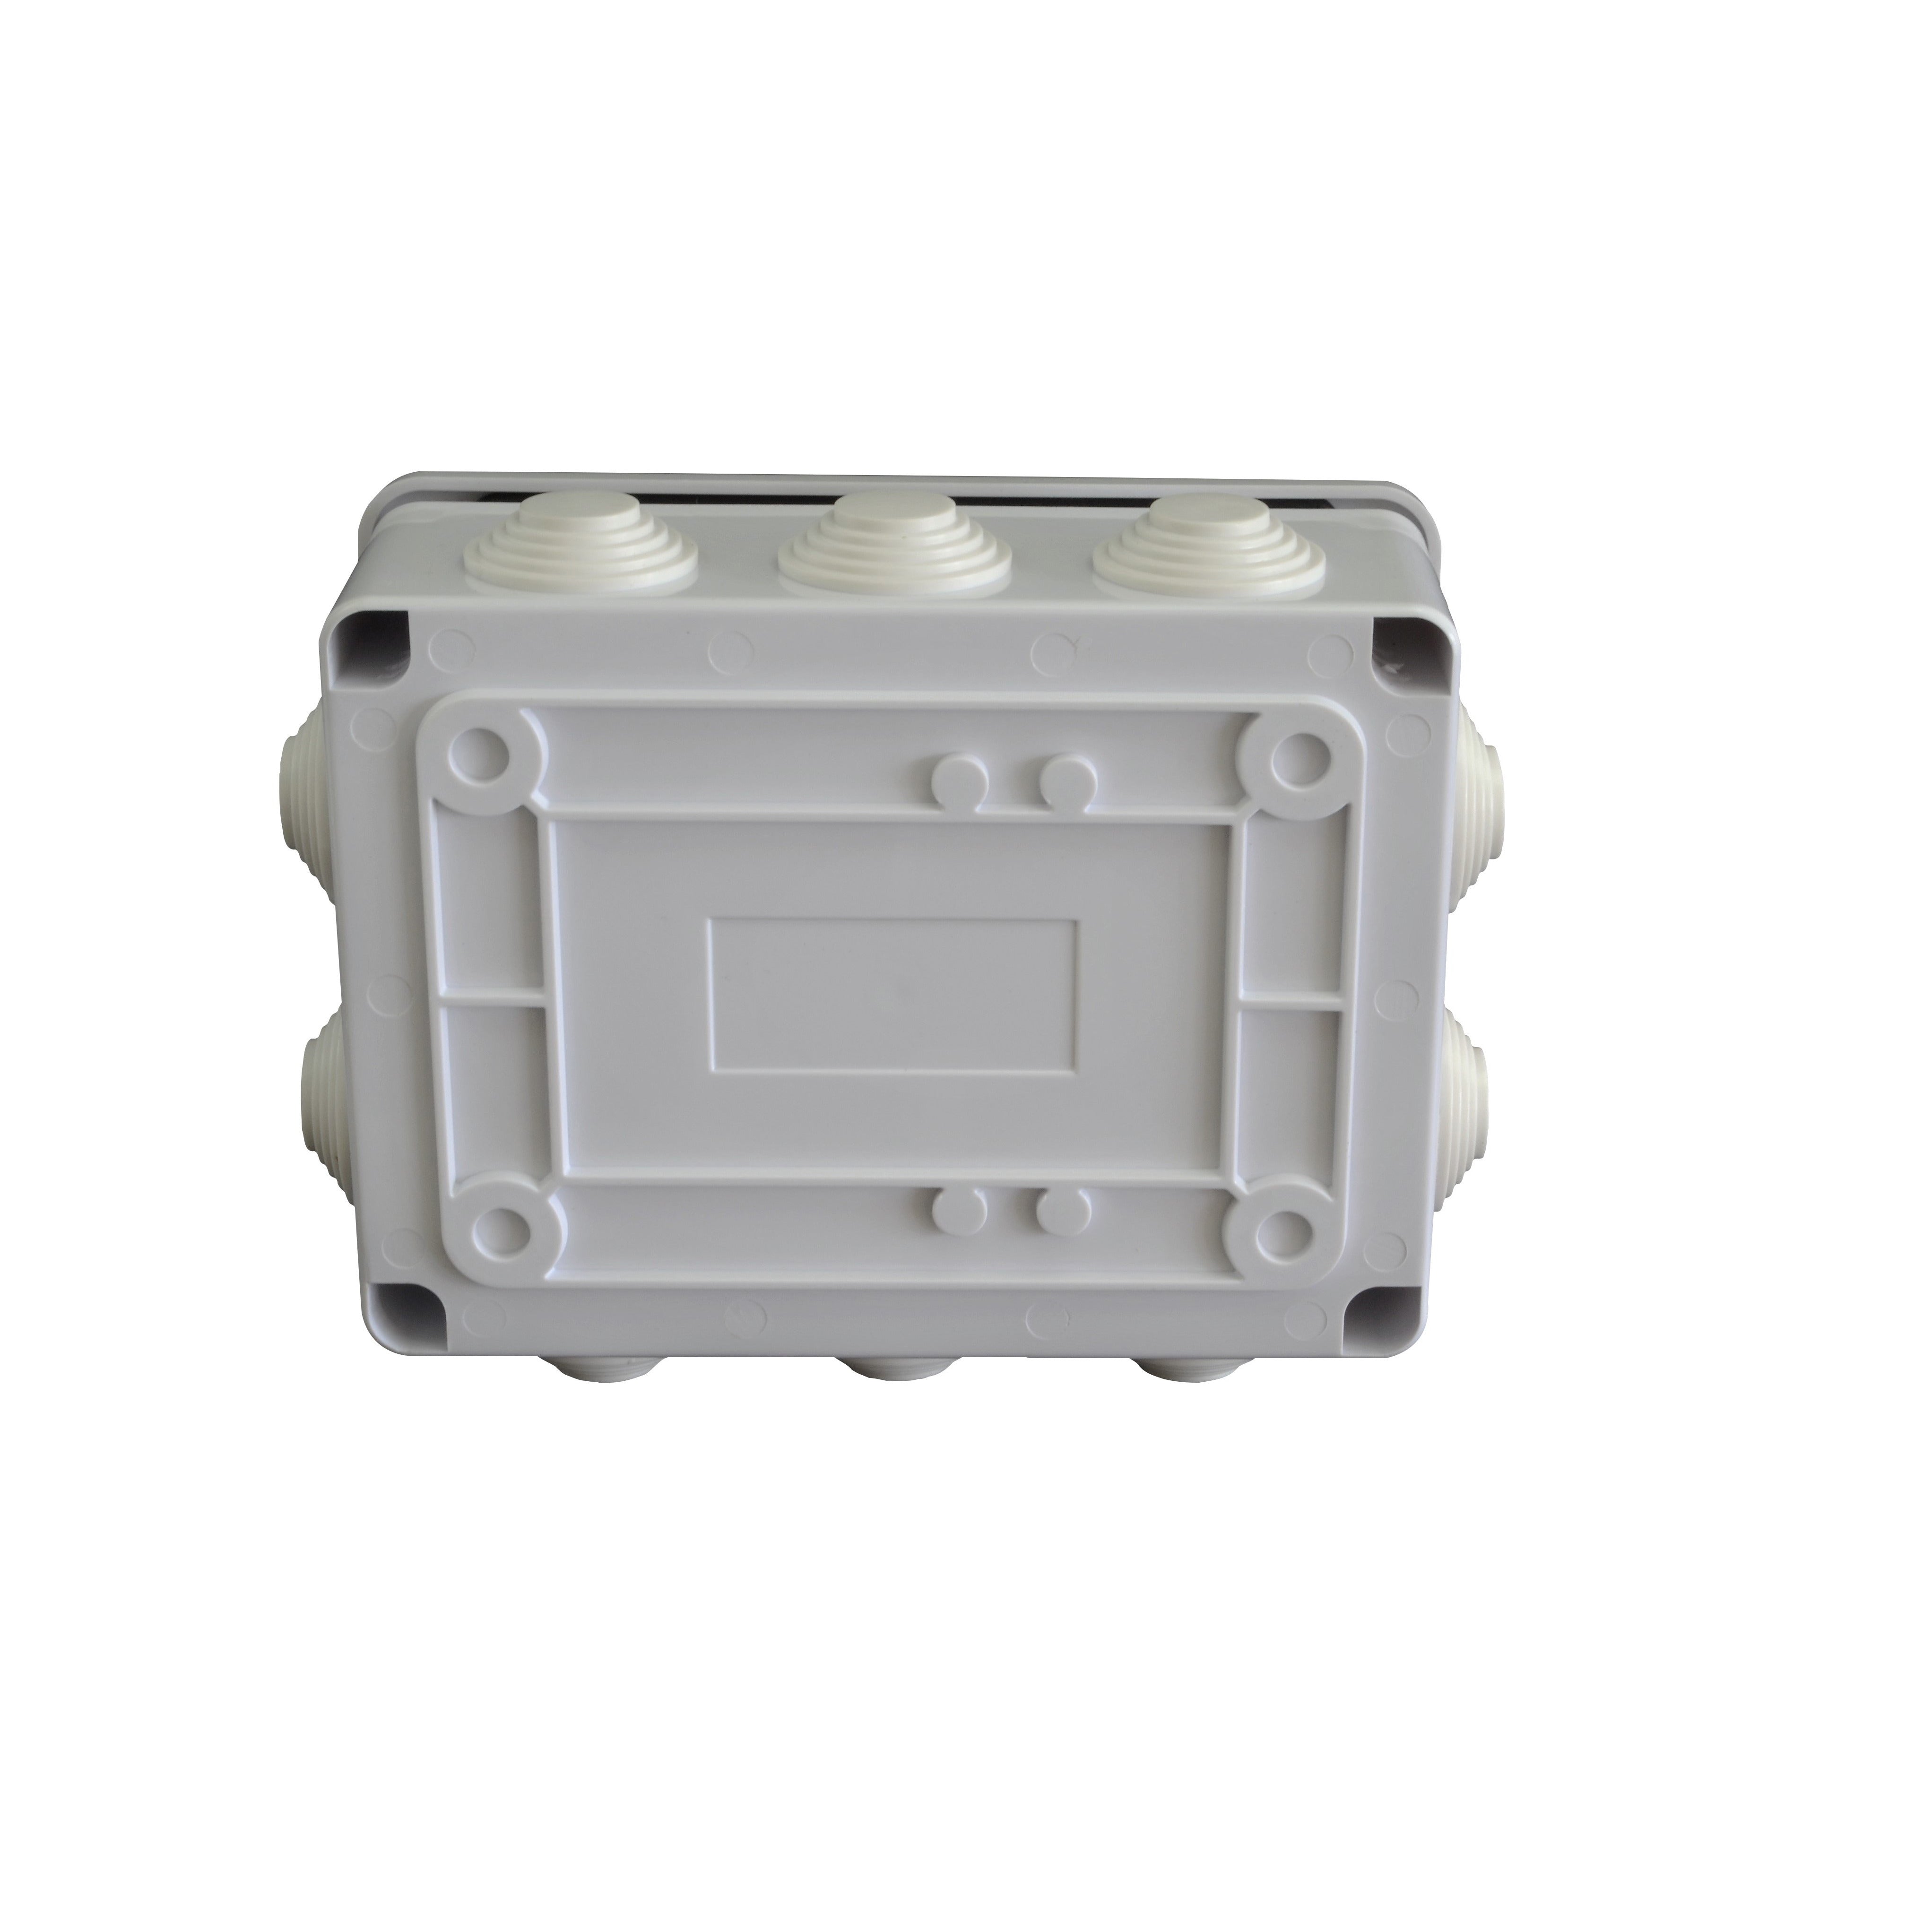 150x110x70 mm ABS Plastic IP65 Waterproof Junction Box